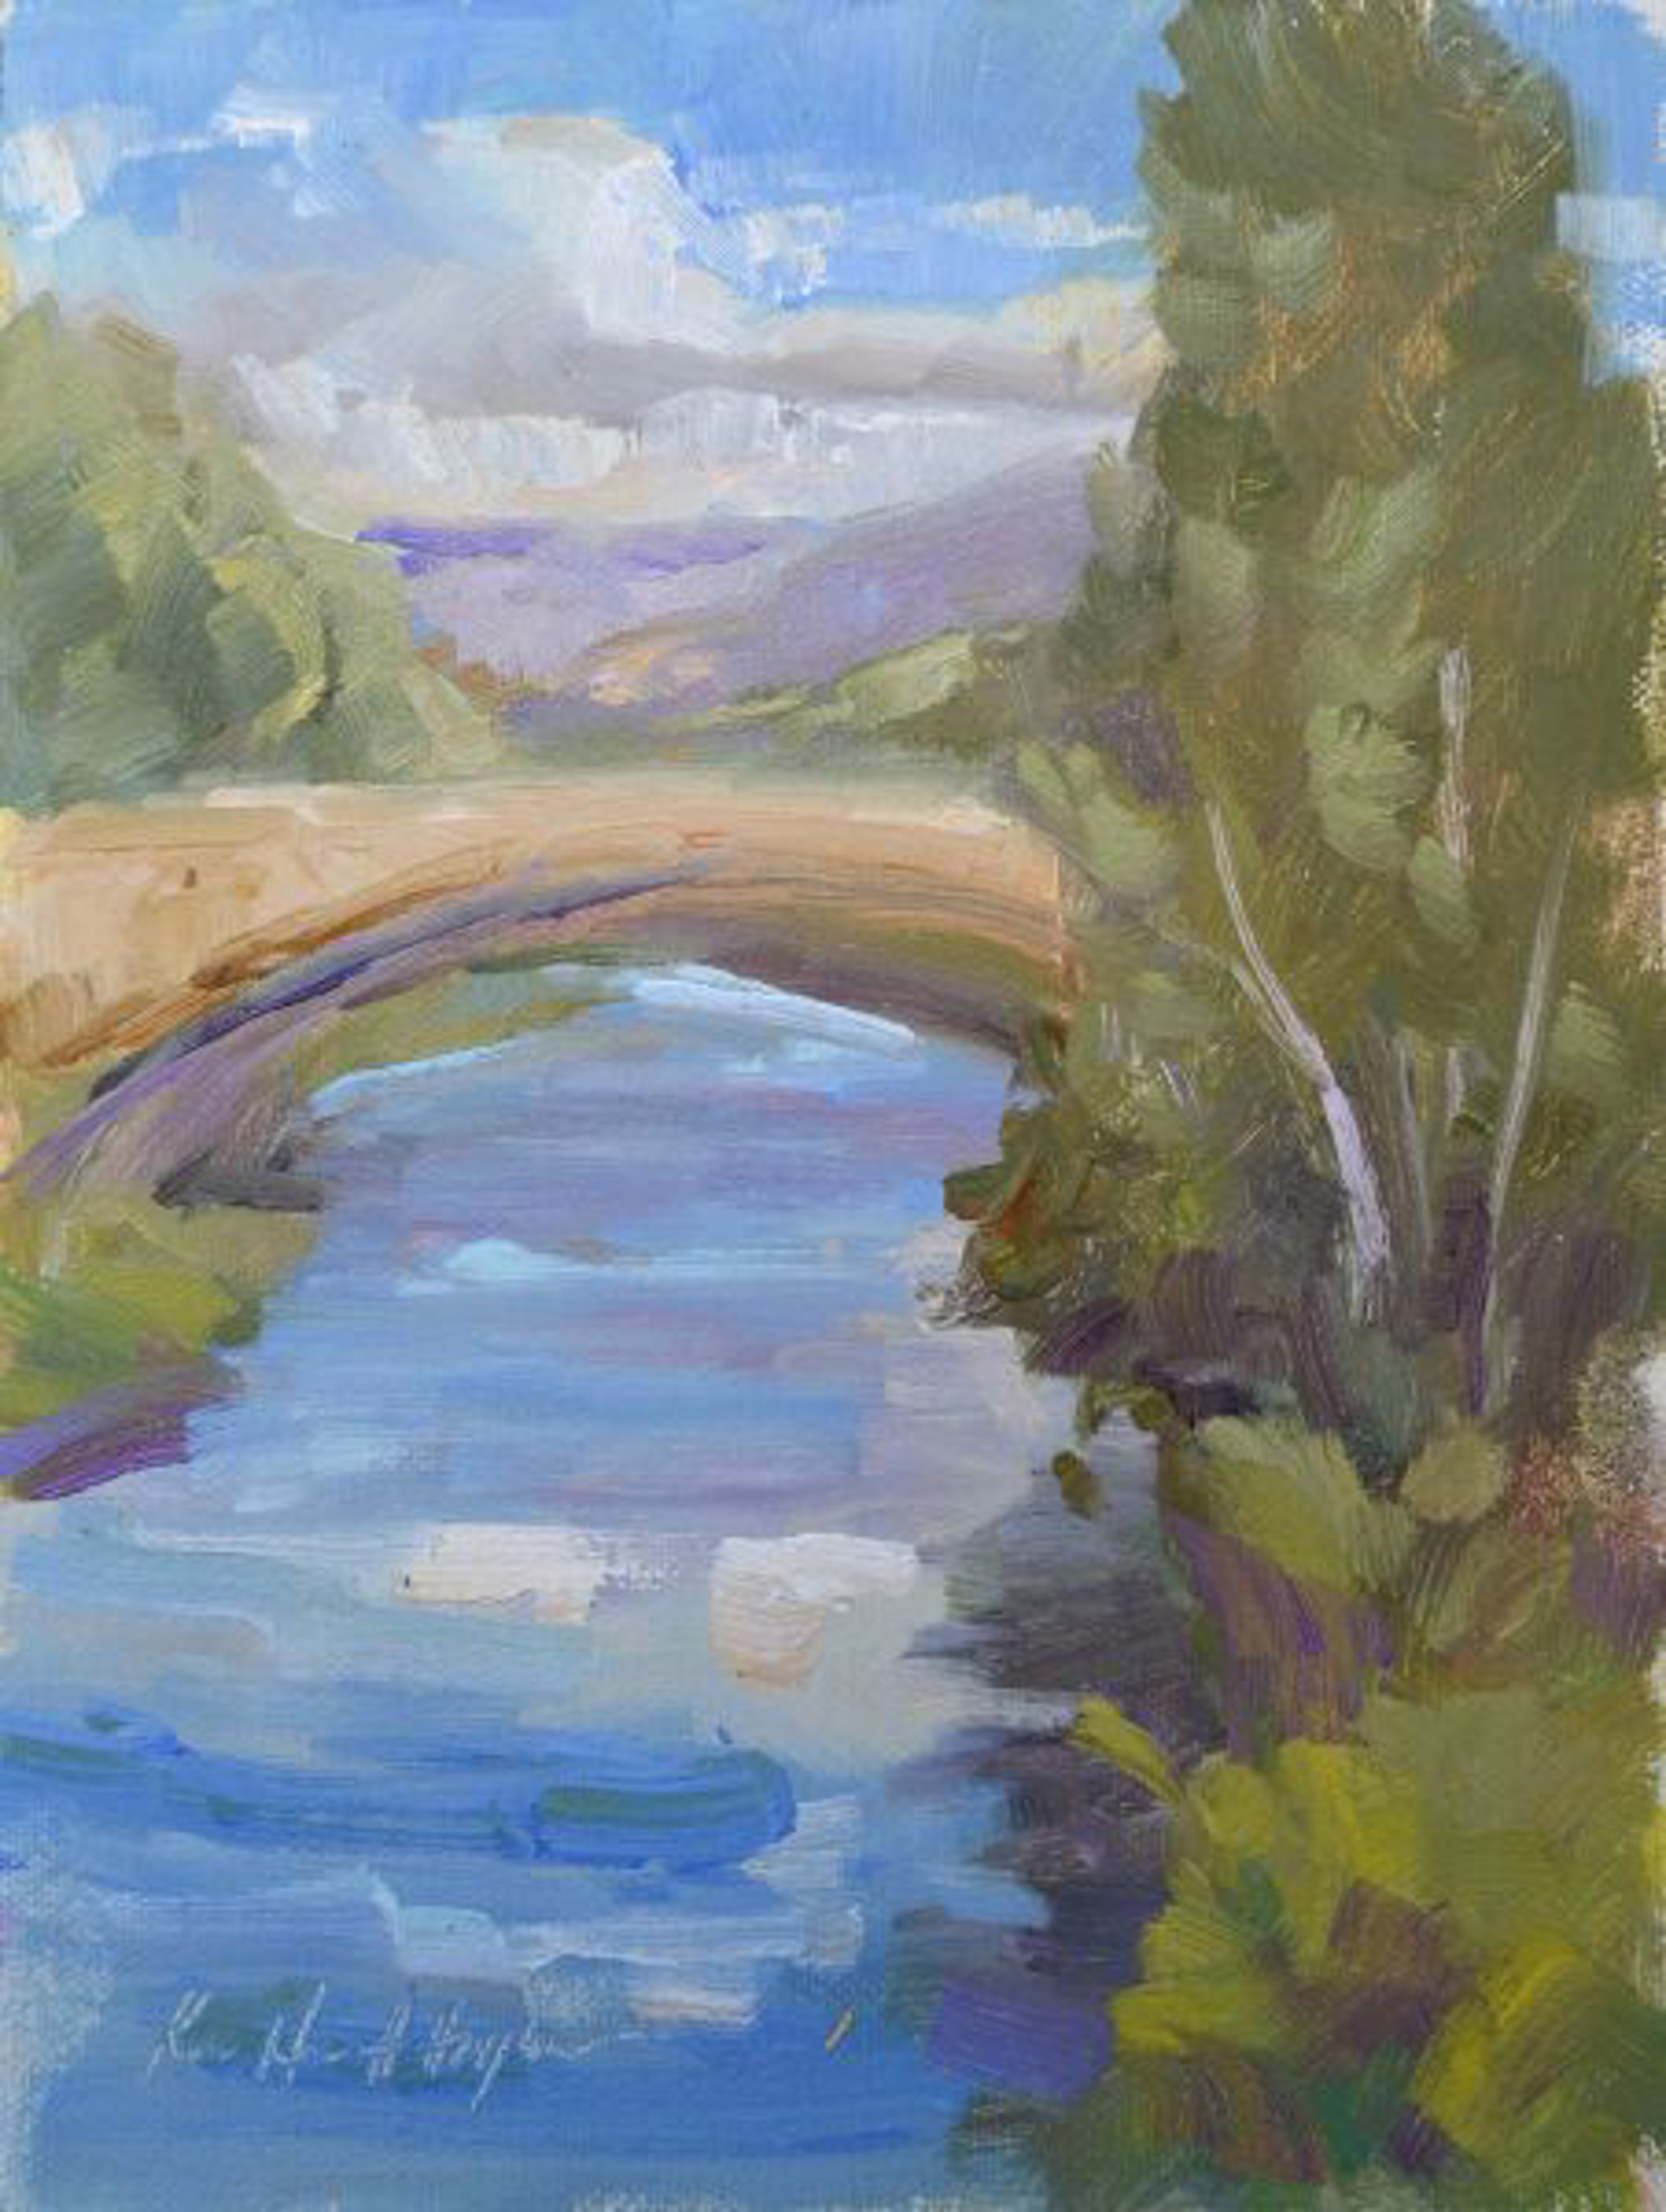 The Arno River in May by Karen Hewitt Hagan